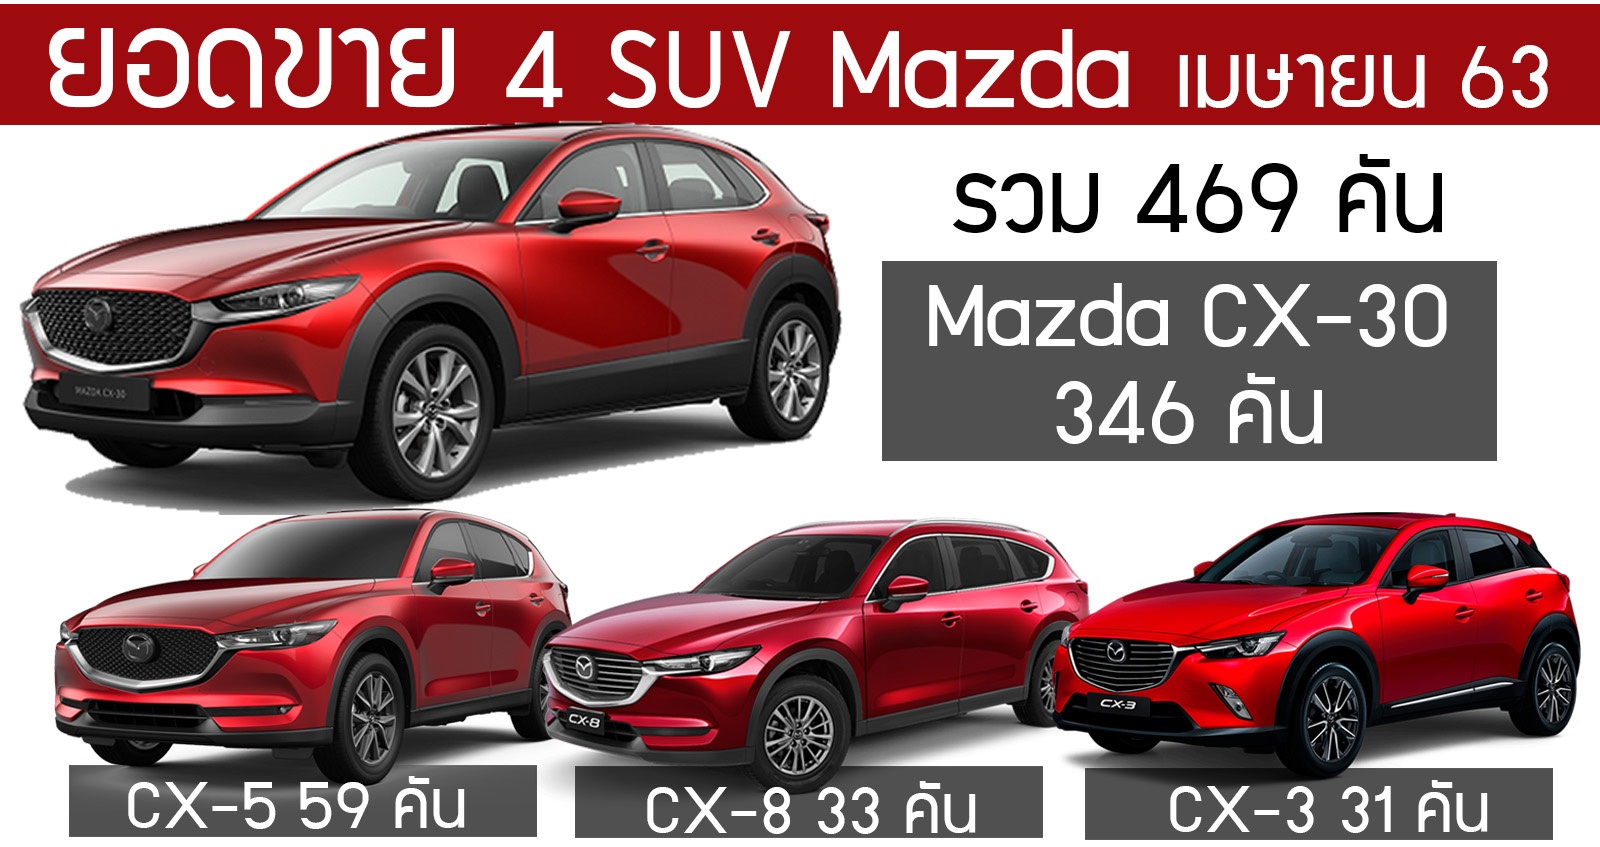 Mazda เผยยอดขาย 4 SUV เมษายน 63 CX-30 ขายดี!